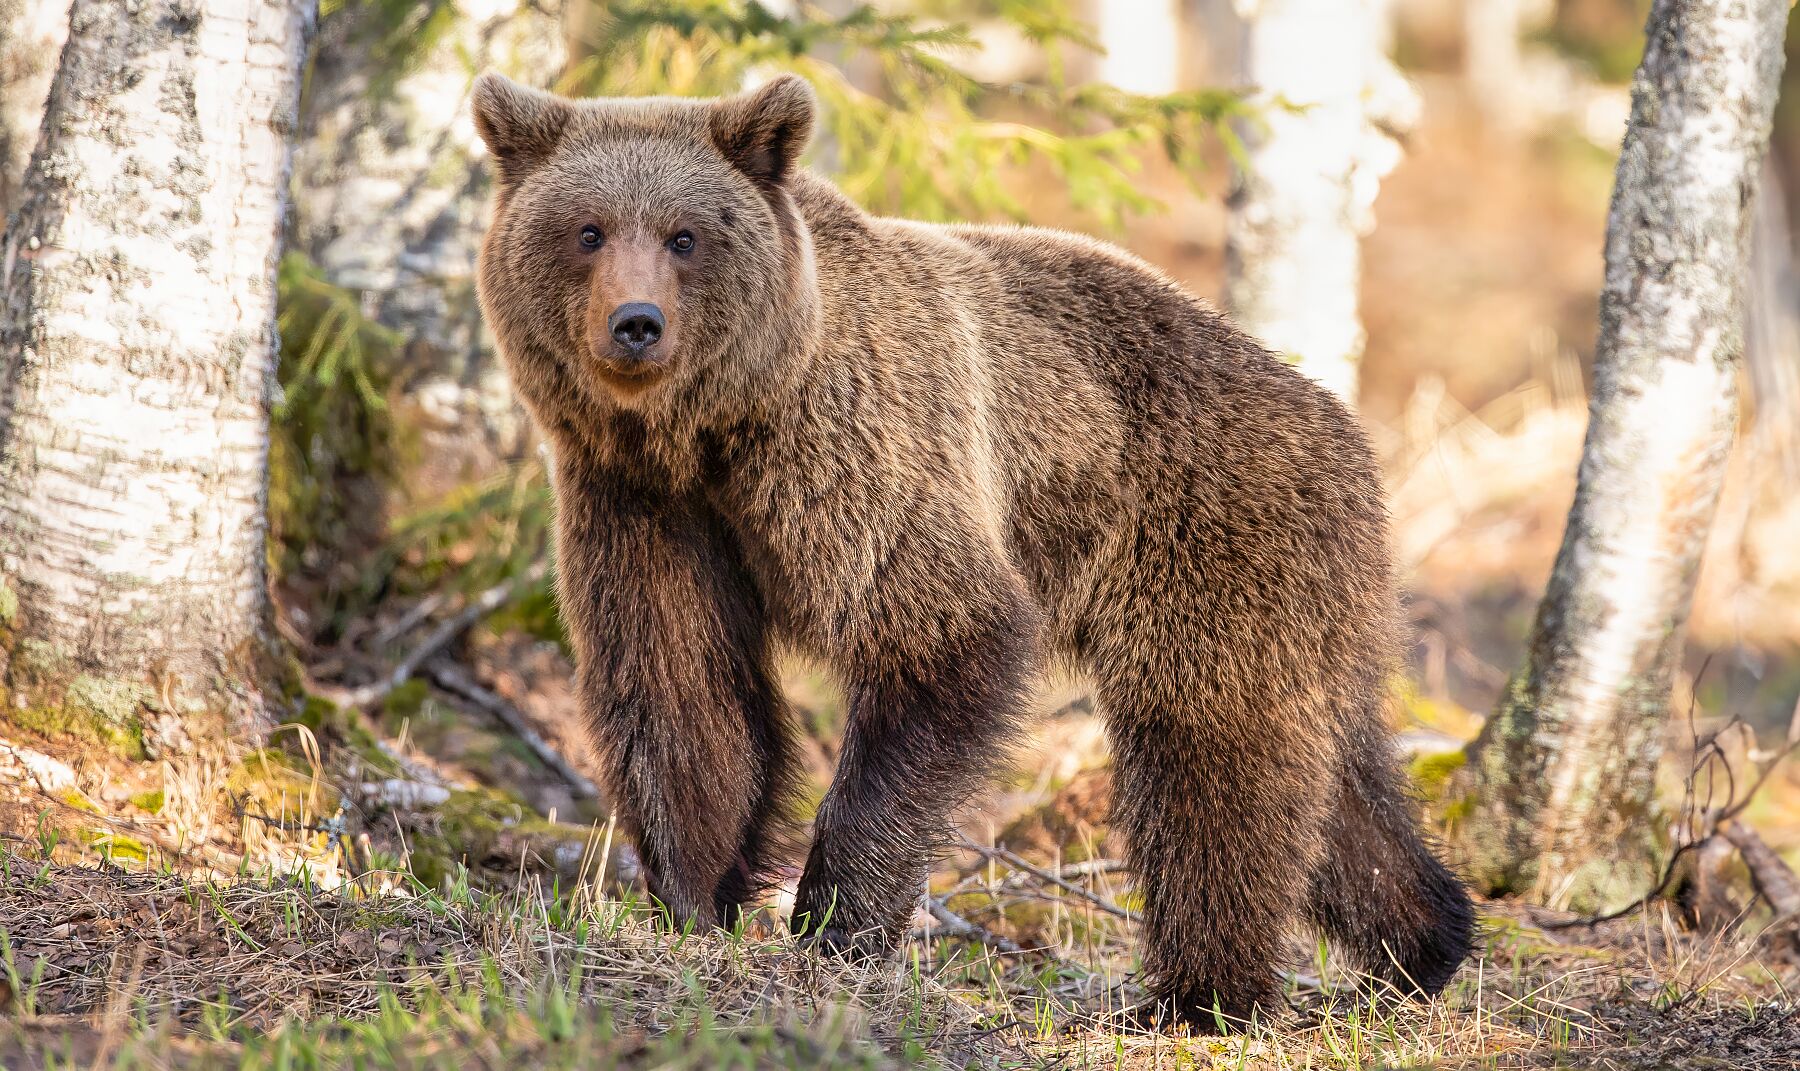 BROWN BEAR IN FINLAND